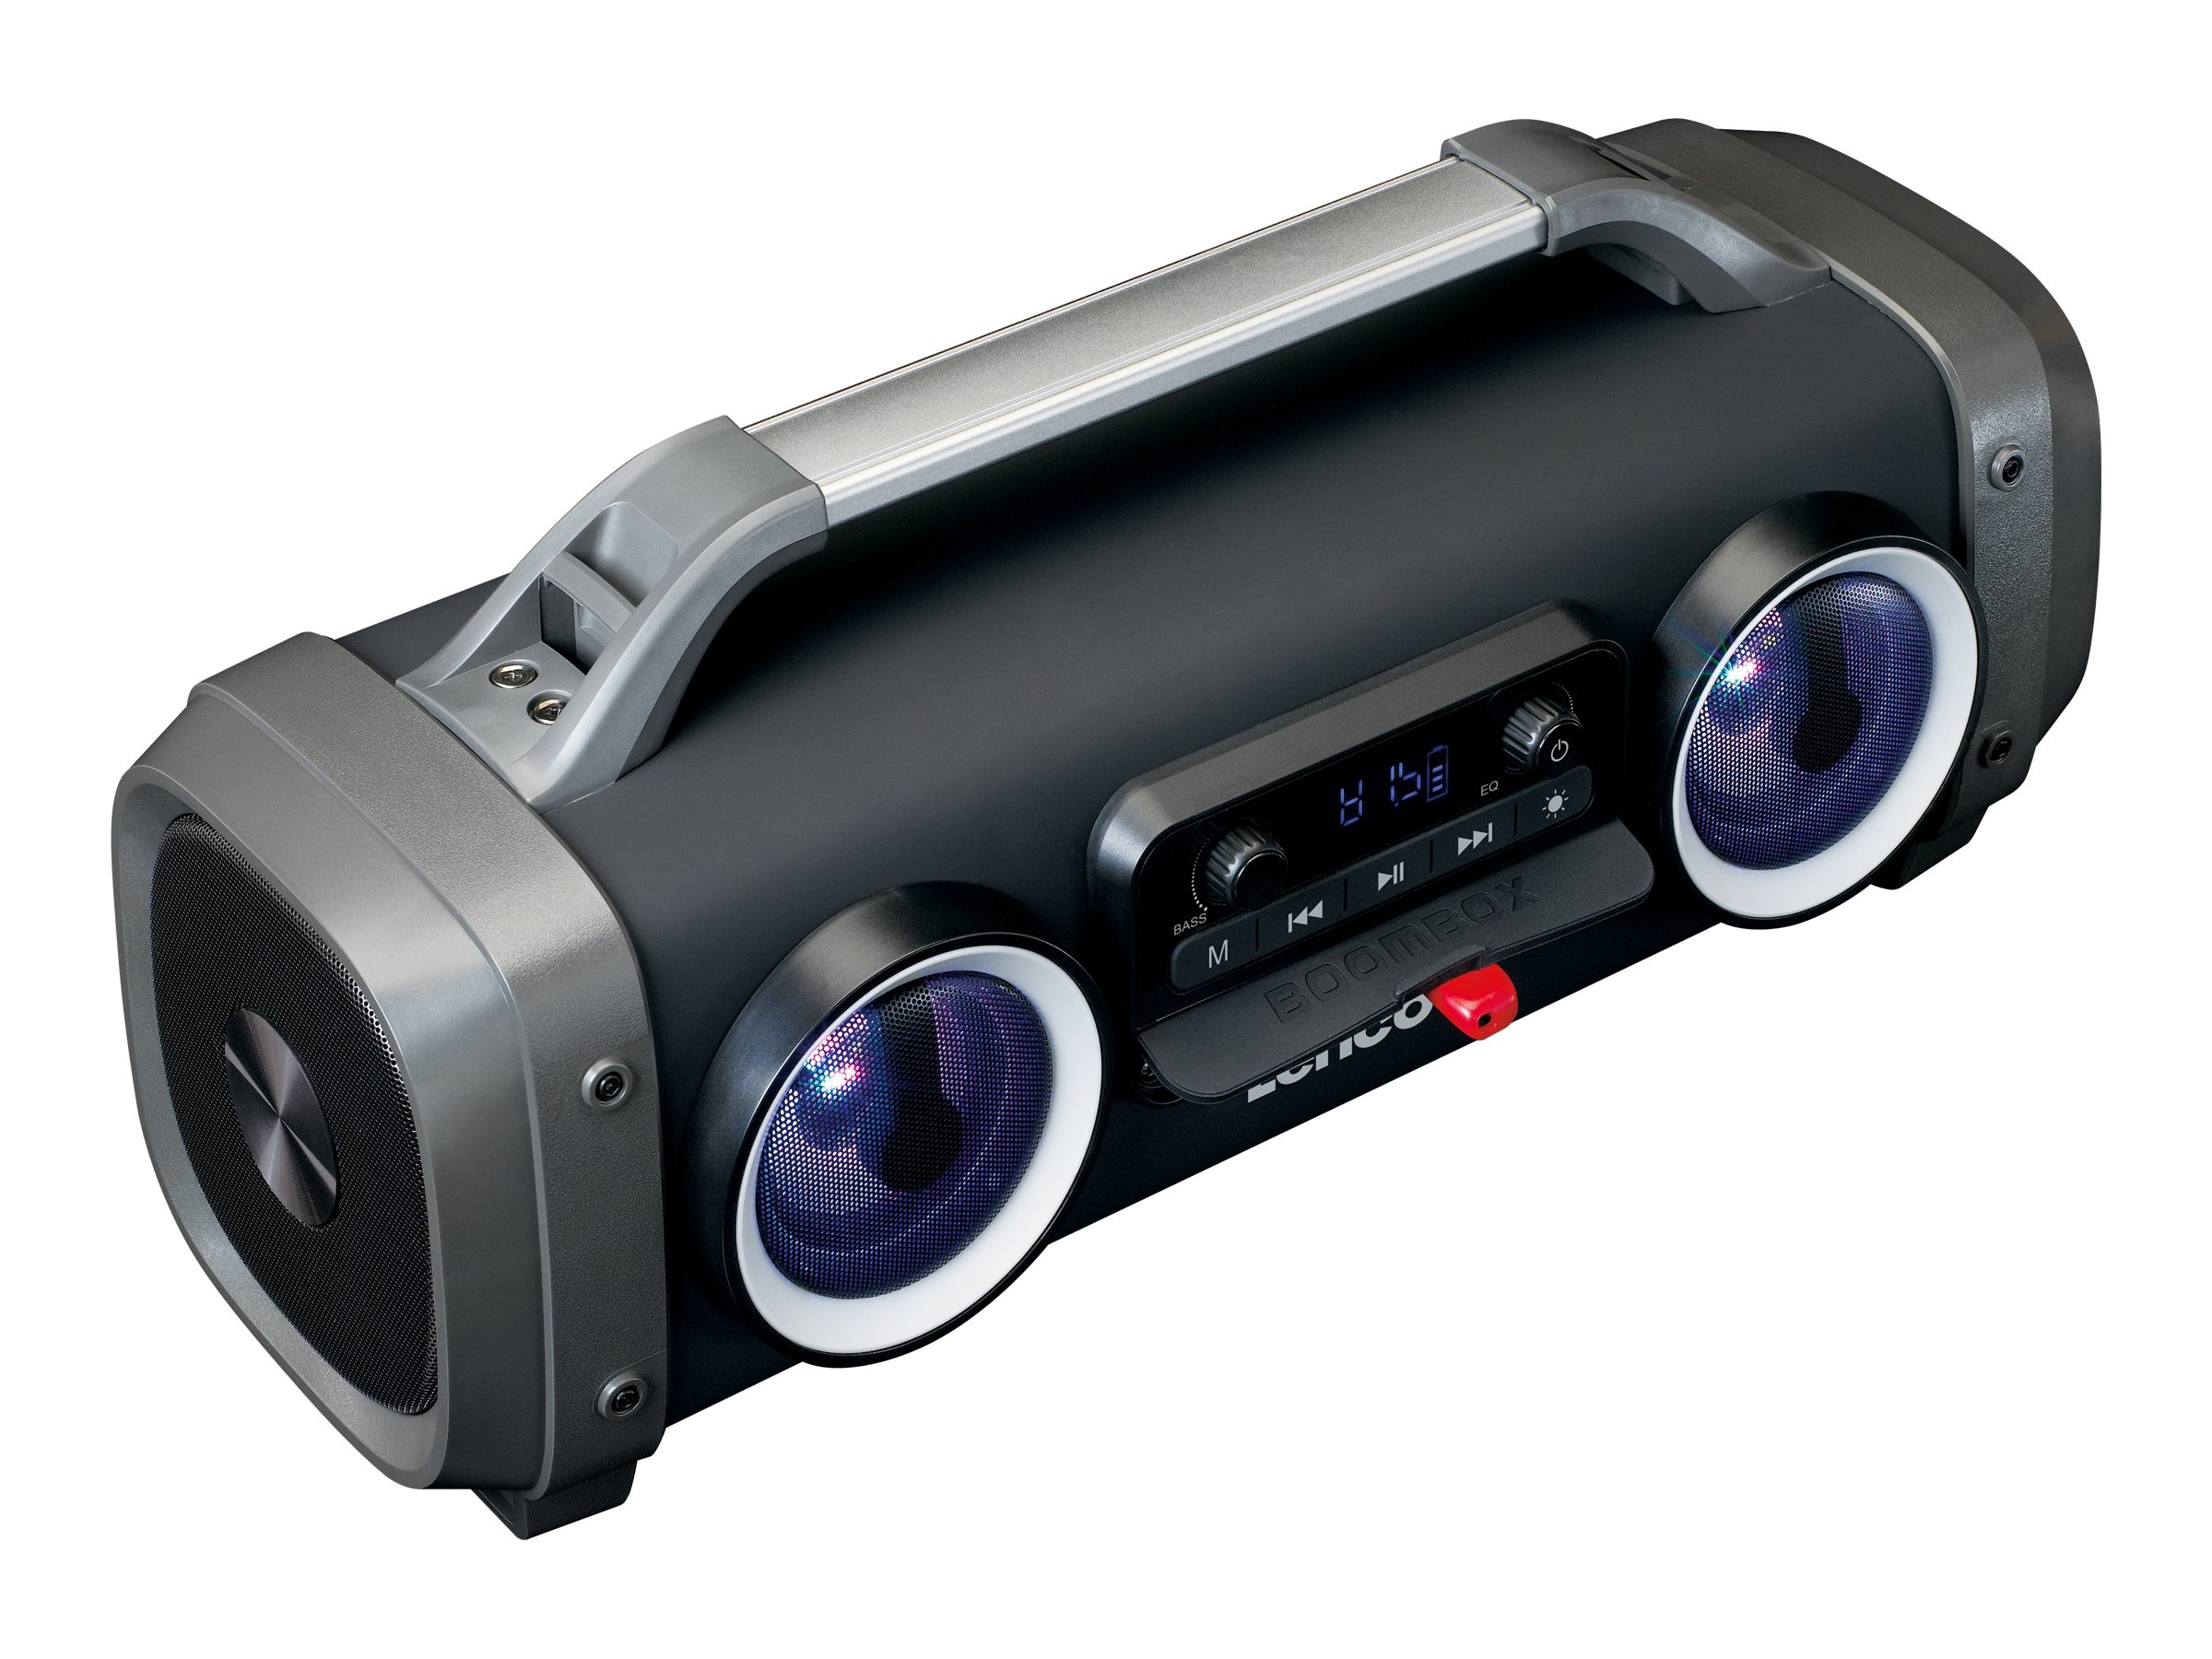 Lenco SPR-100 - Boombox-Lautsprecher - tragbar